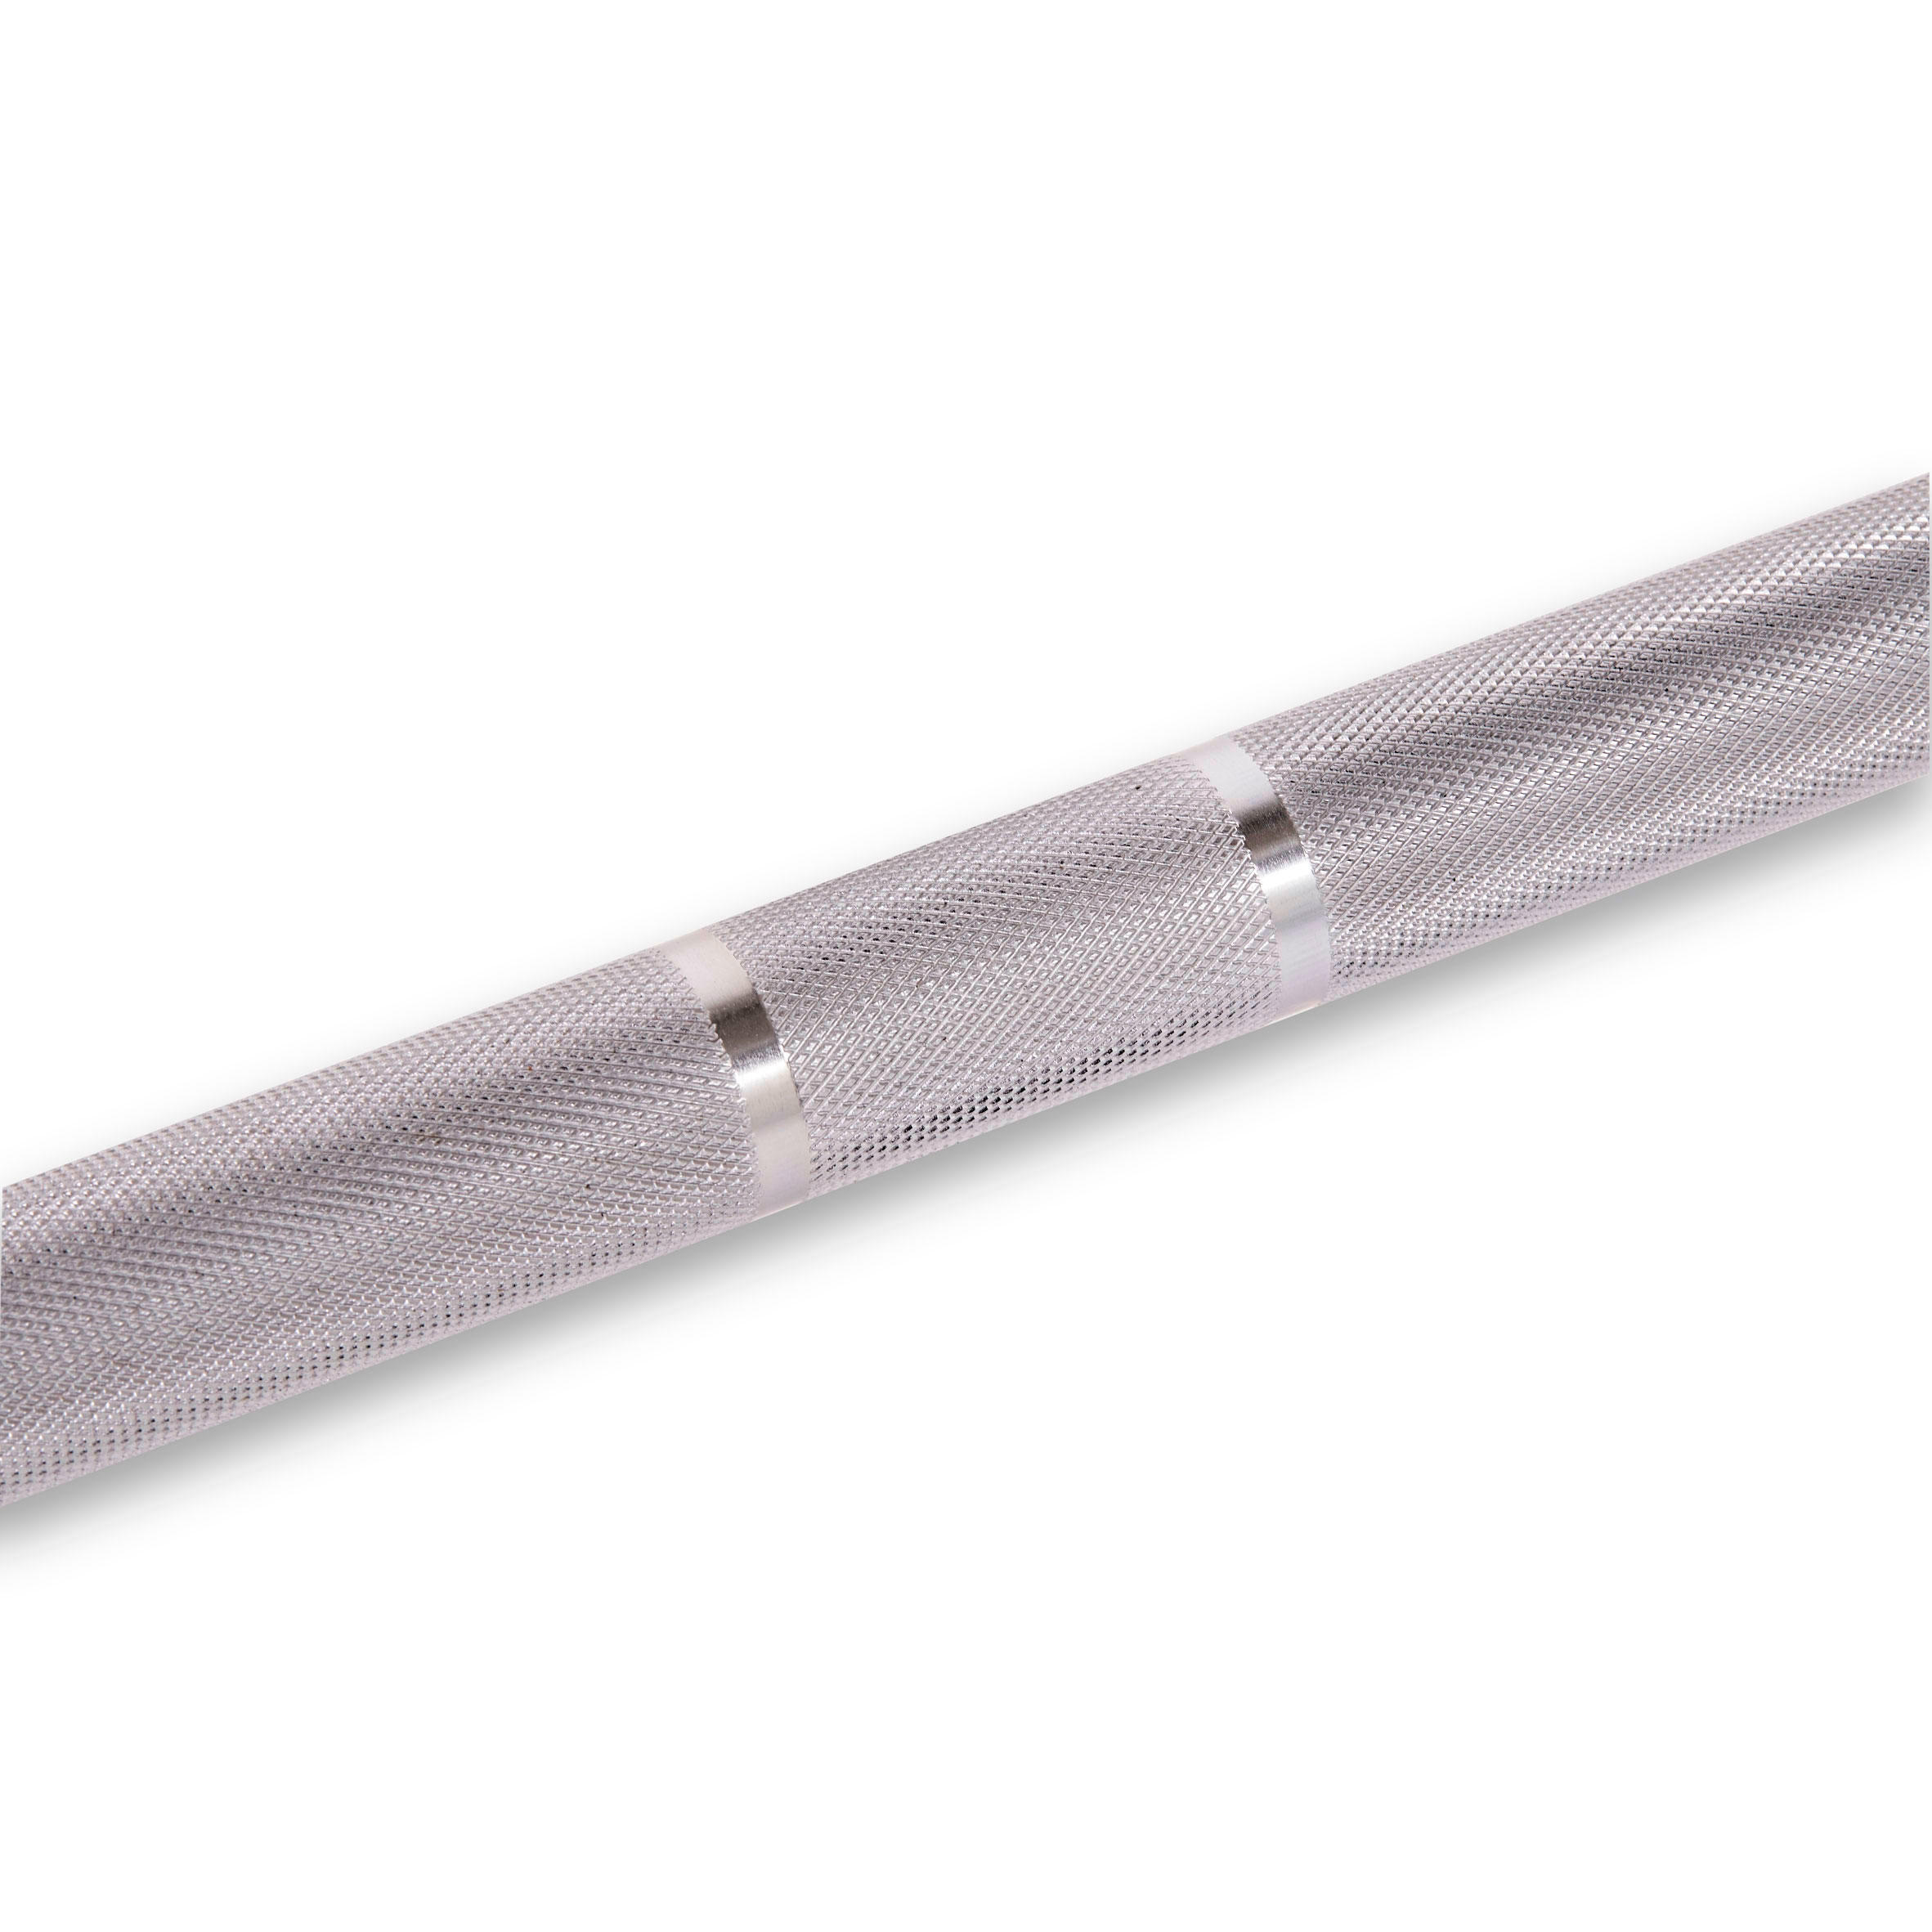 Refurbished Weightlifting Bar 20 kg - 50mm Diameter Sleeve - 28mm grip - A Grade 5/7